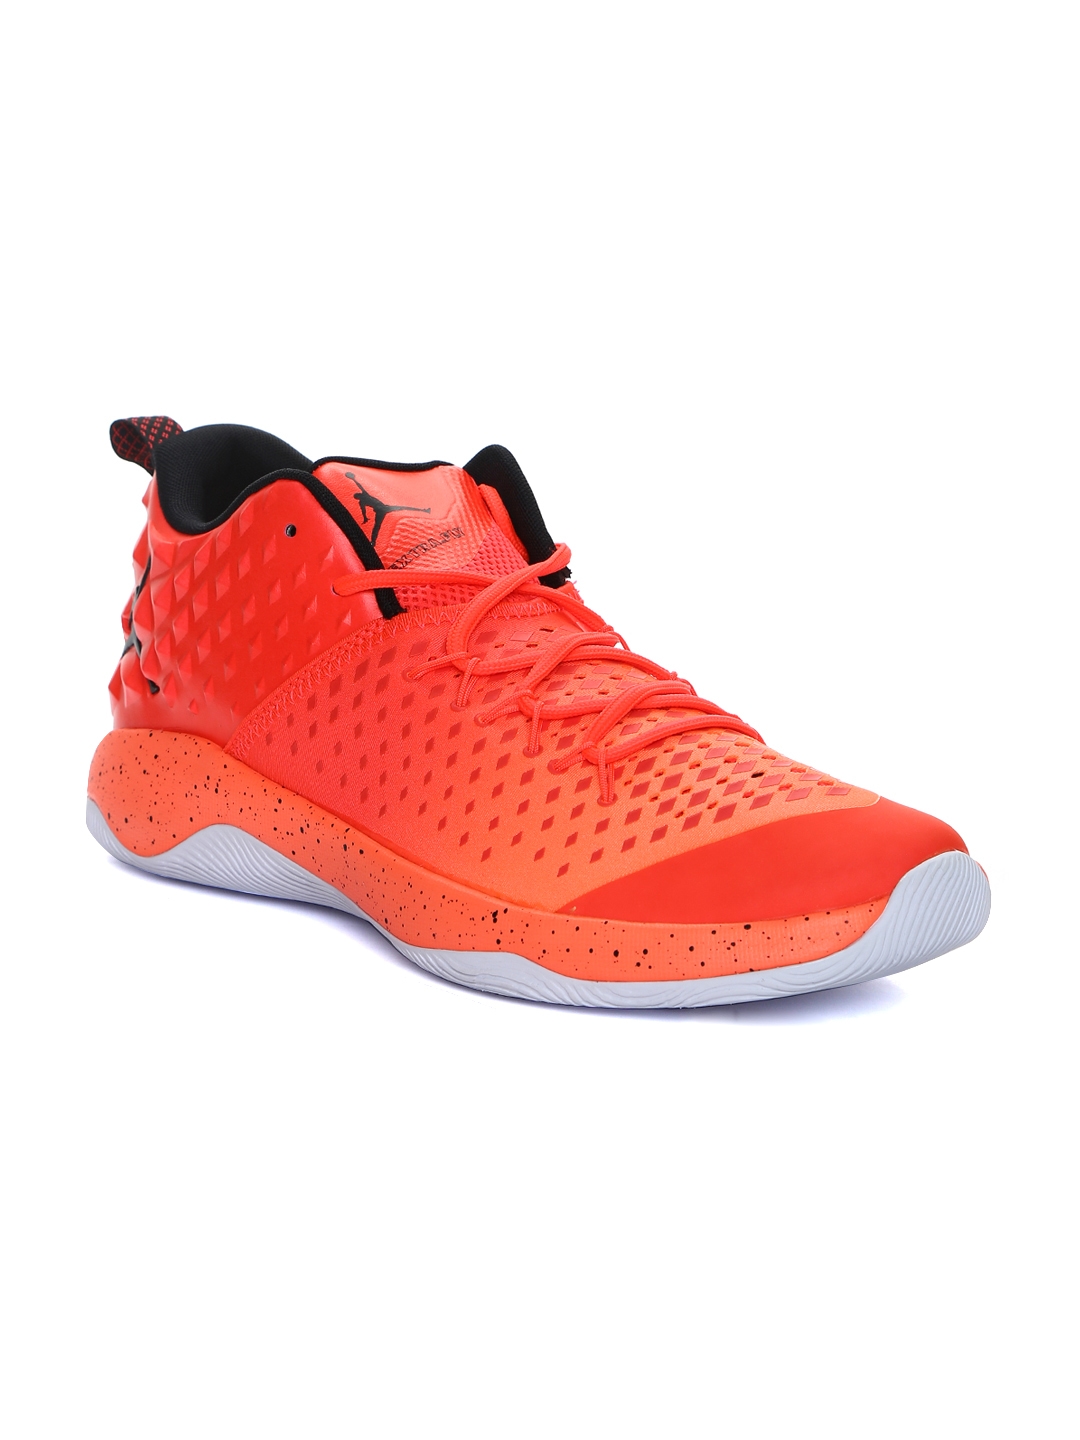 Buy Neon Orange Jordan Extra Fly Basketball Shoes - Shoes for Men 1547995 | Myntra